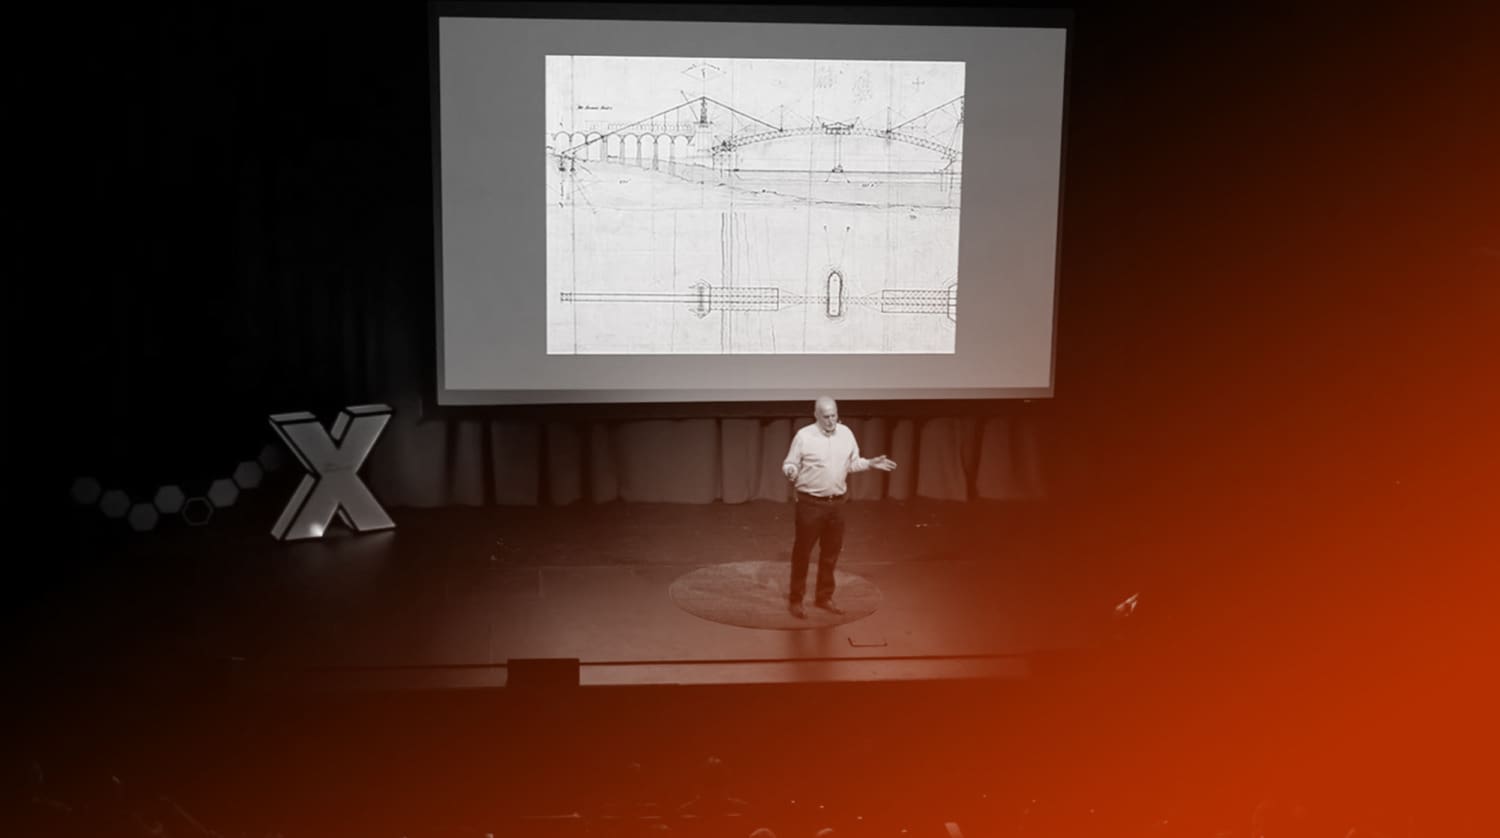 Zahner's VP of Sales Engineering, Tony Birchler, presents at TEDxMissouriS&T event.